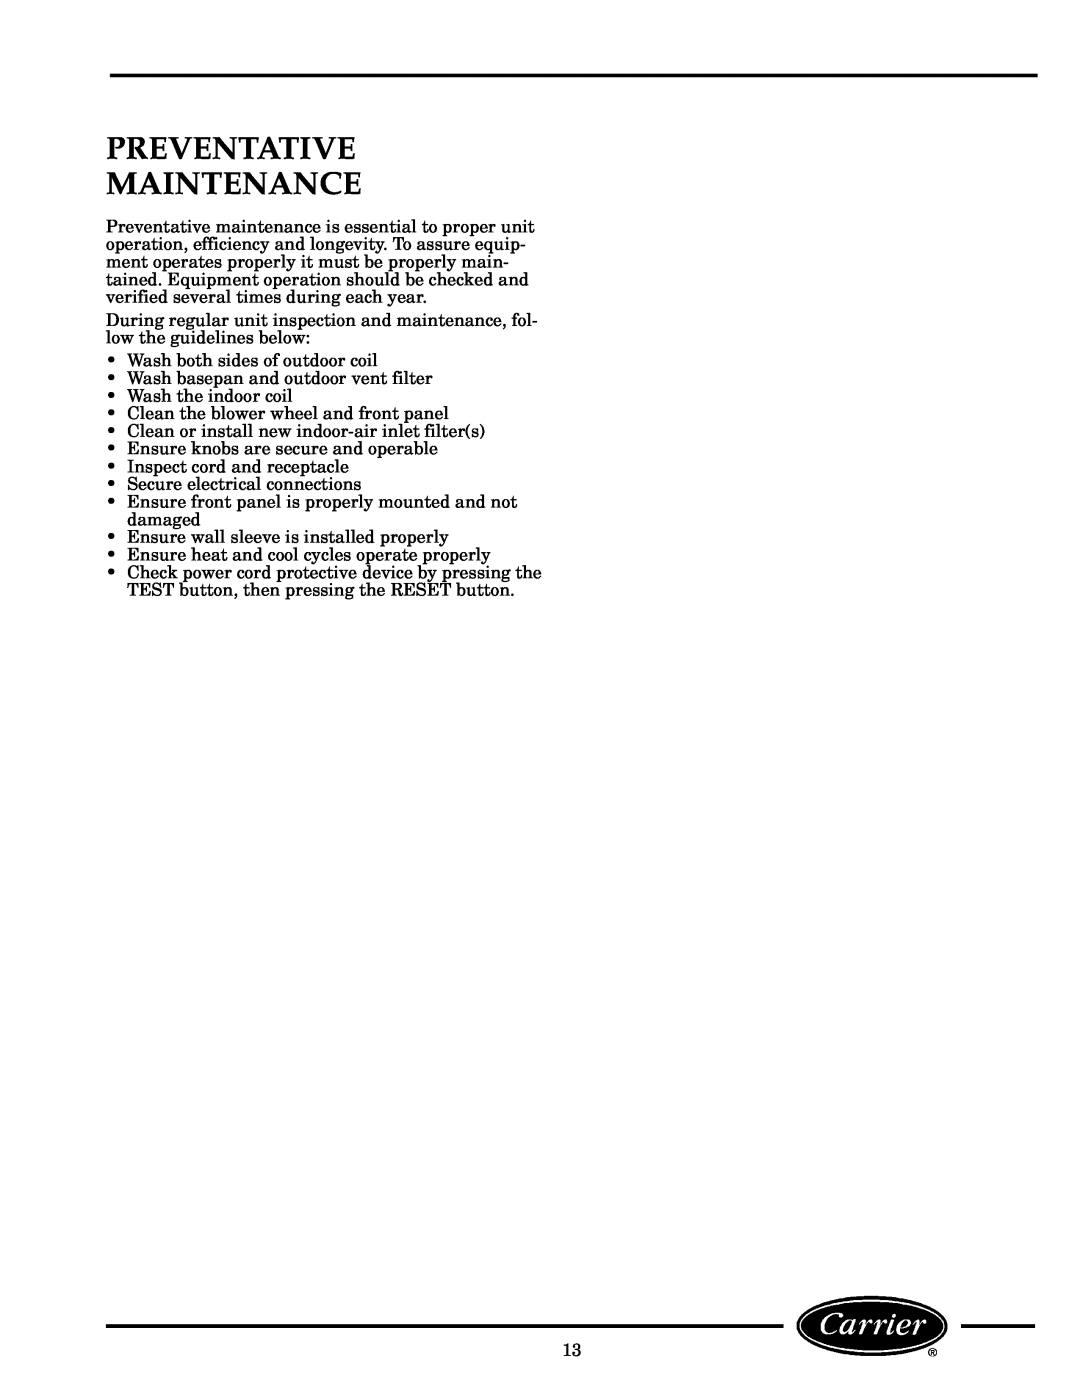 Carrier 52P owner manual Preventative Maintenance 